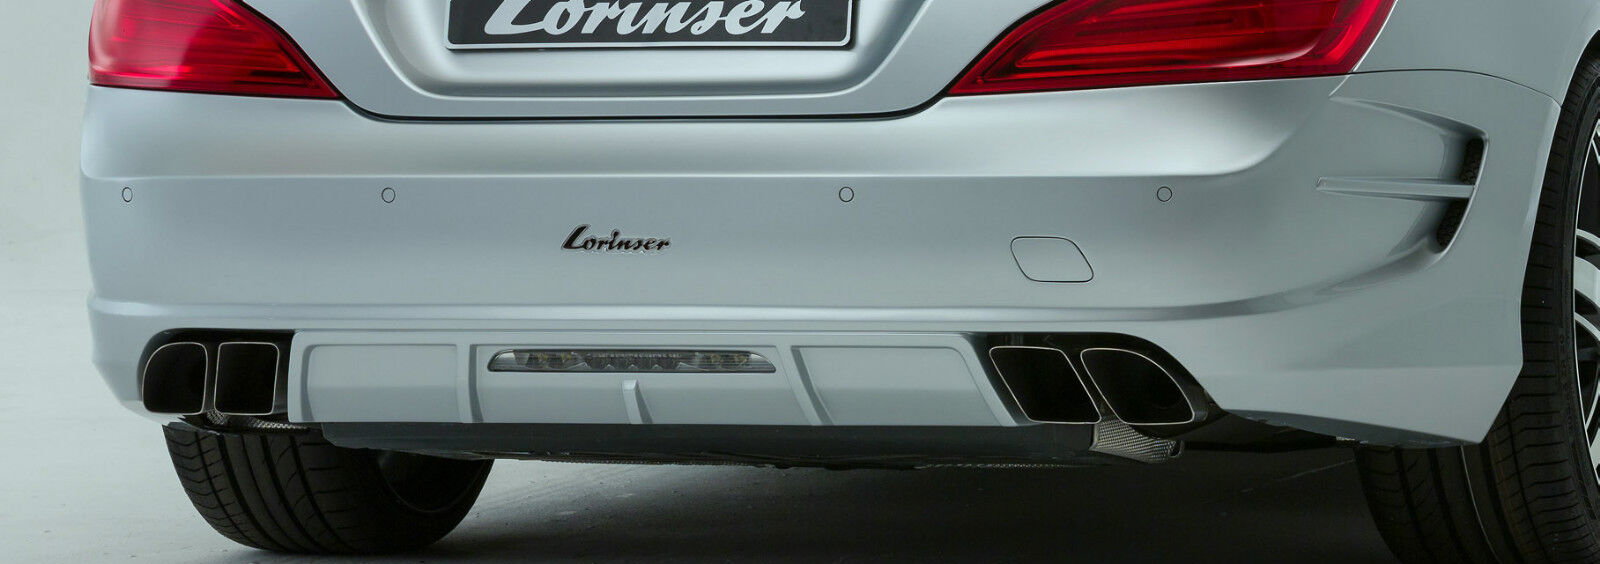 Mercedes Lorinser OEM Sports Exhaust Muffler & Tailpipes R231 SL Class 2013+ NEW